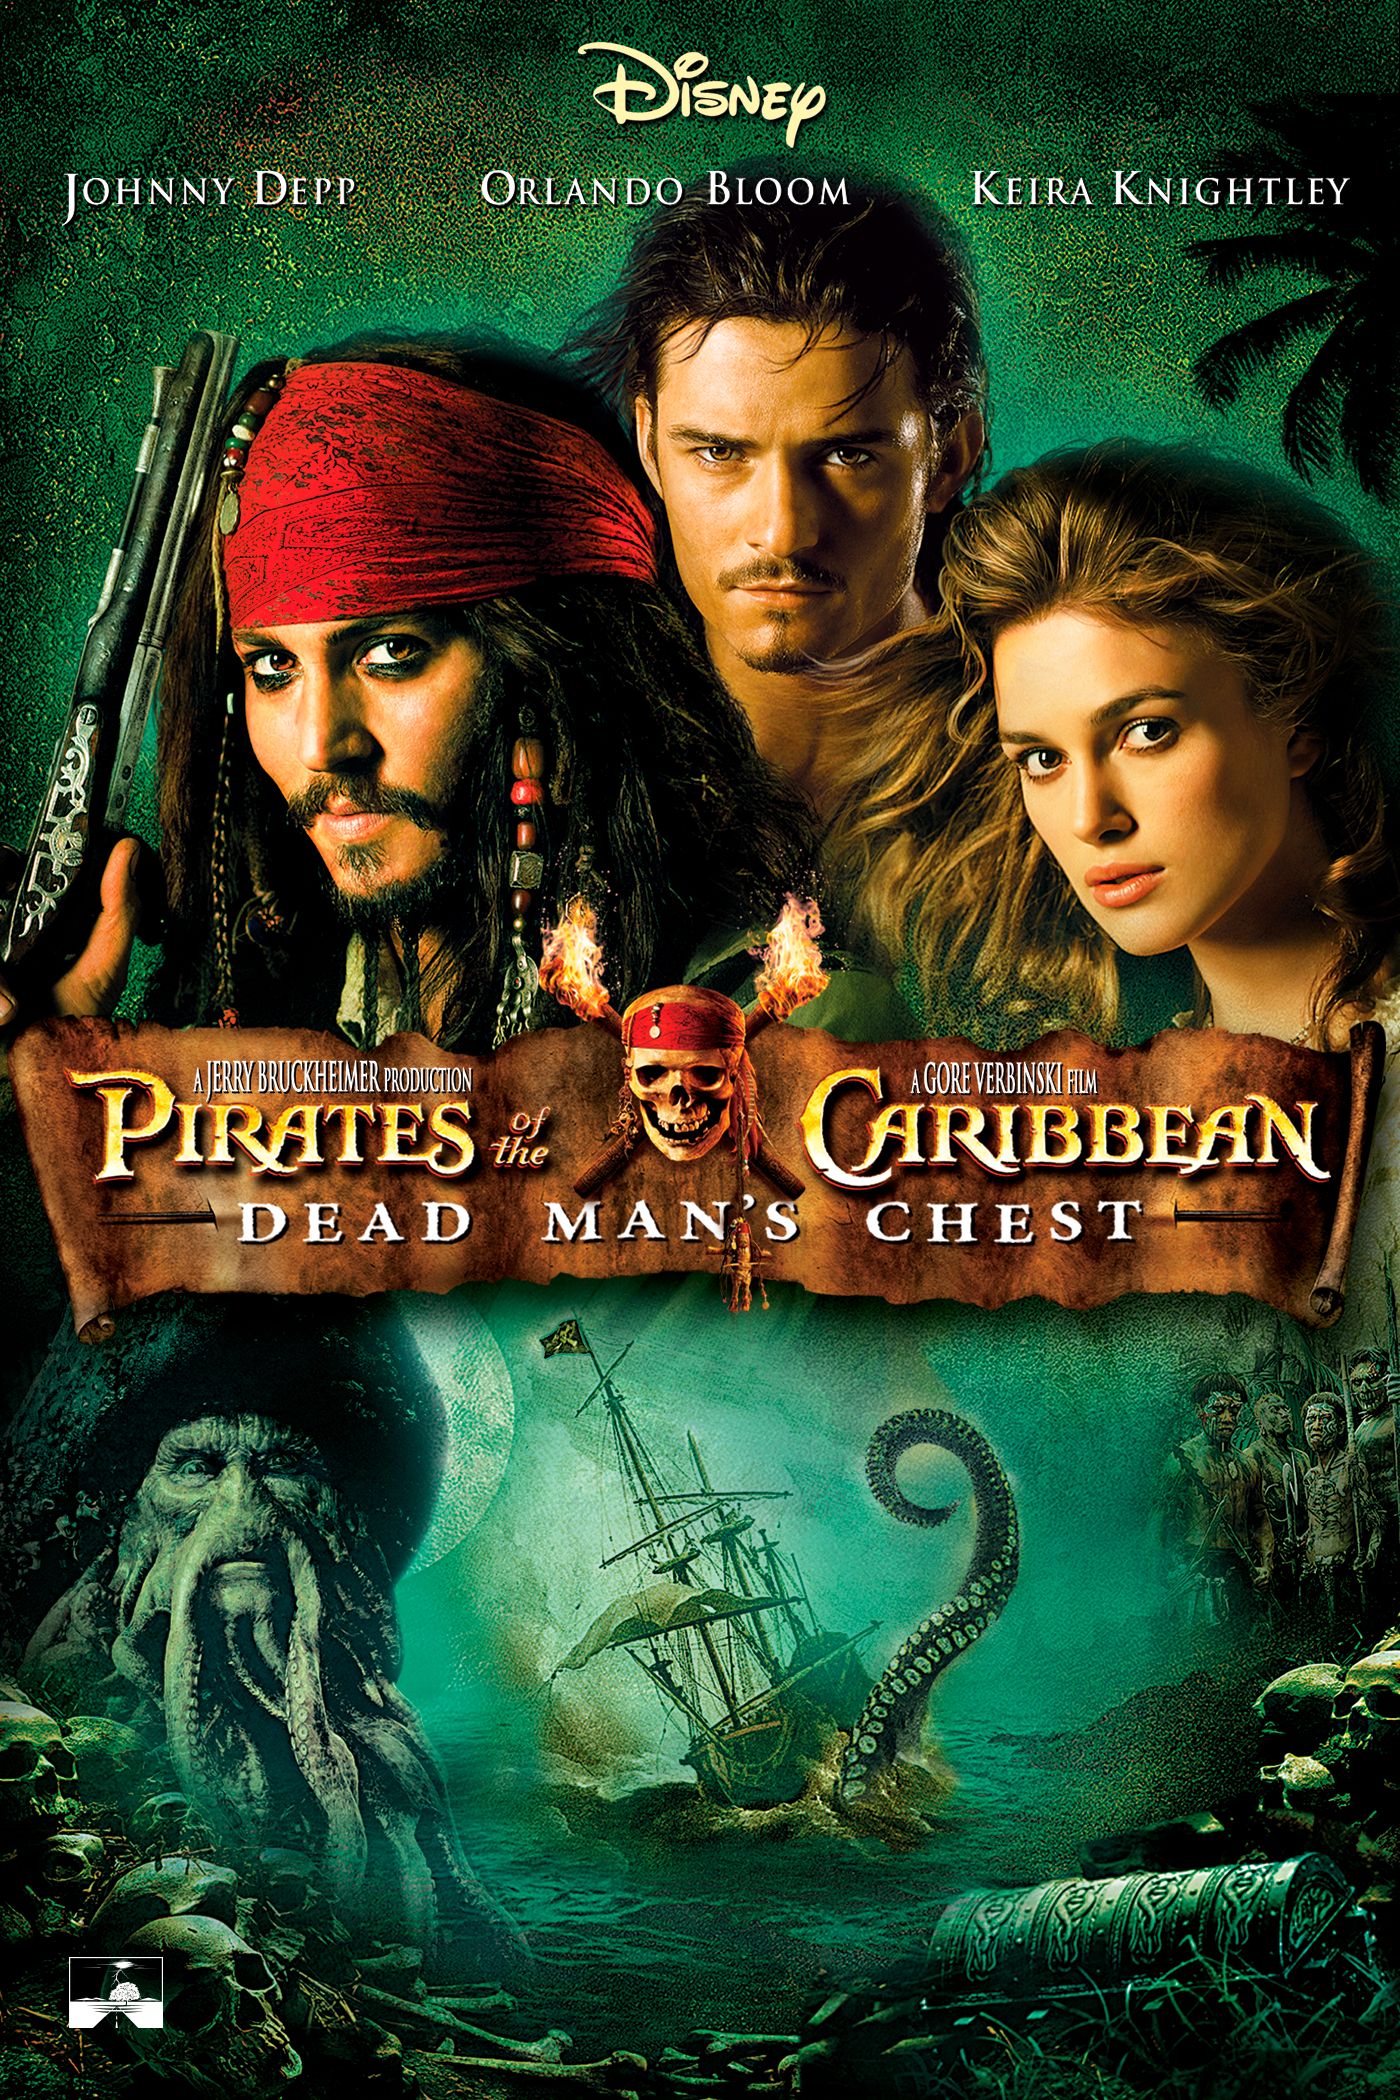 carine robert recommends Pirates Ii Full Movie